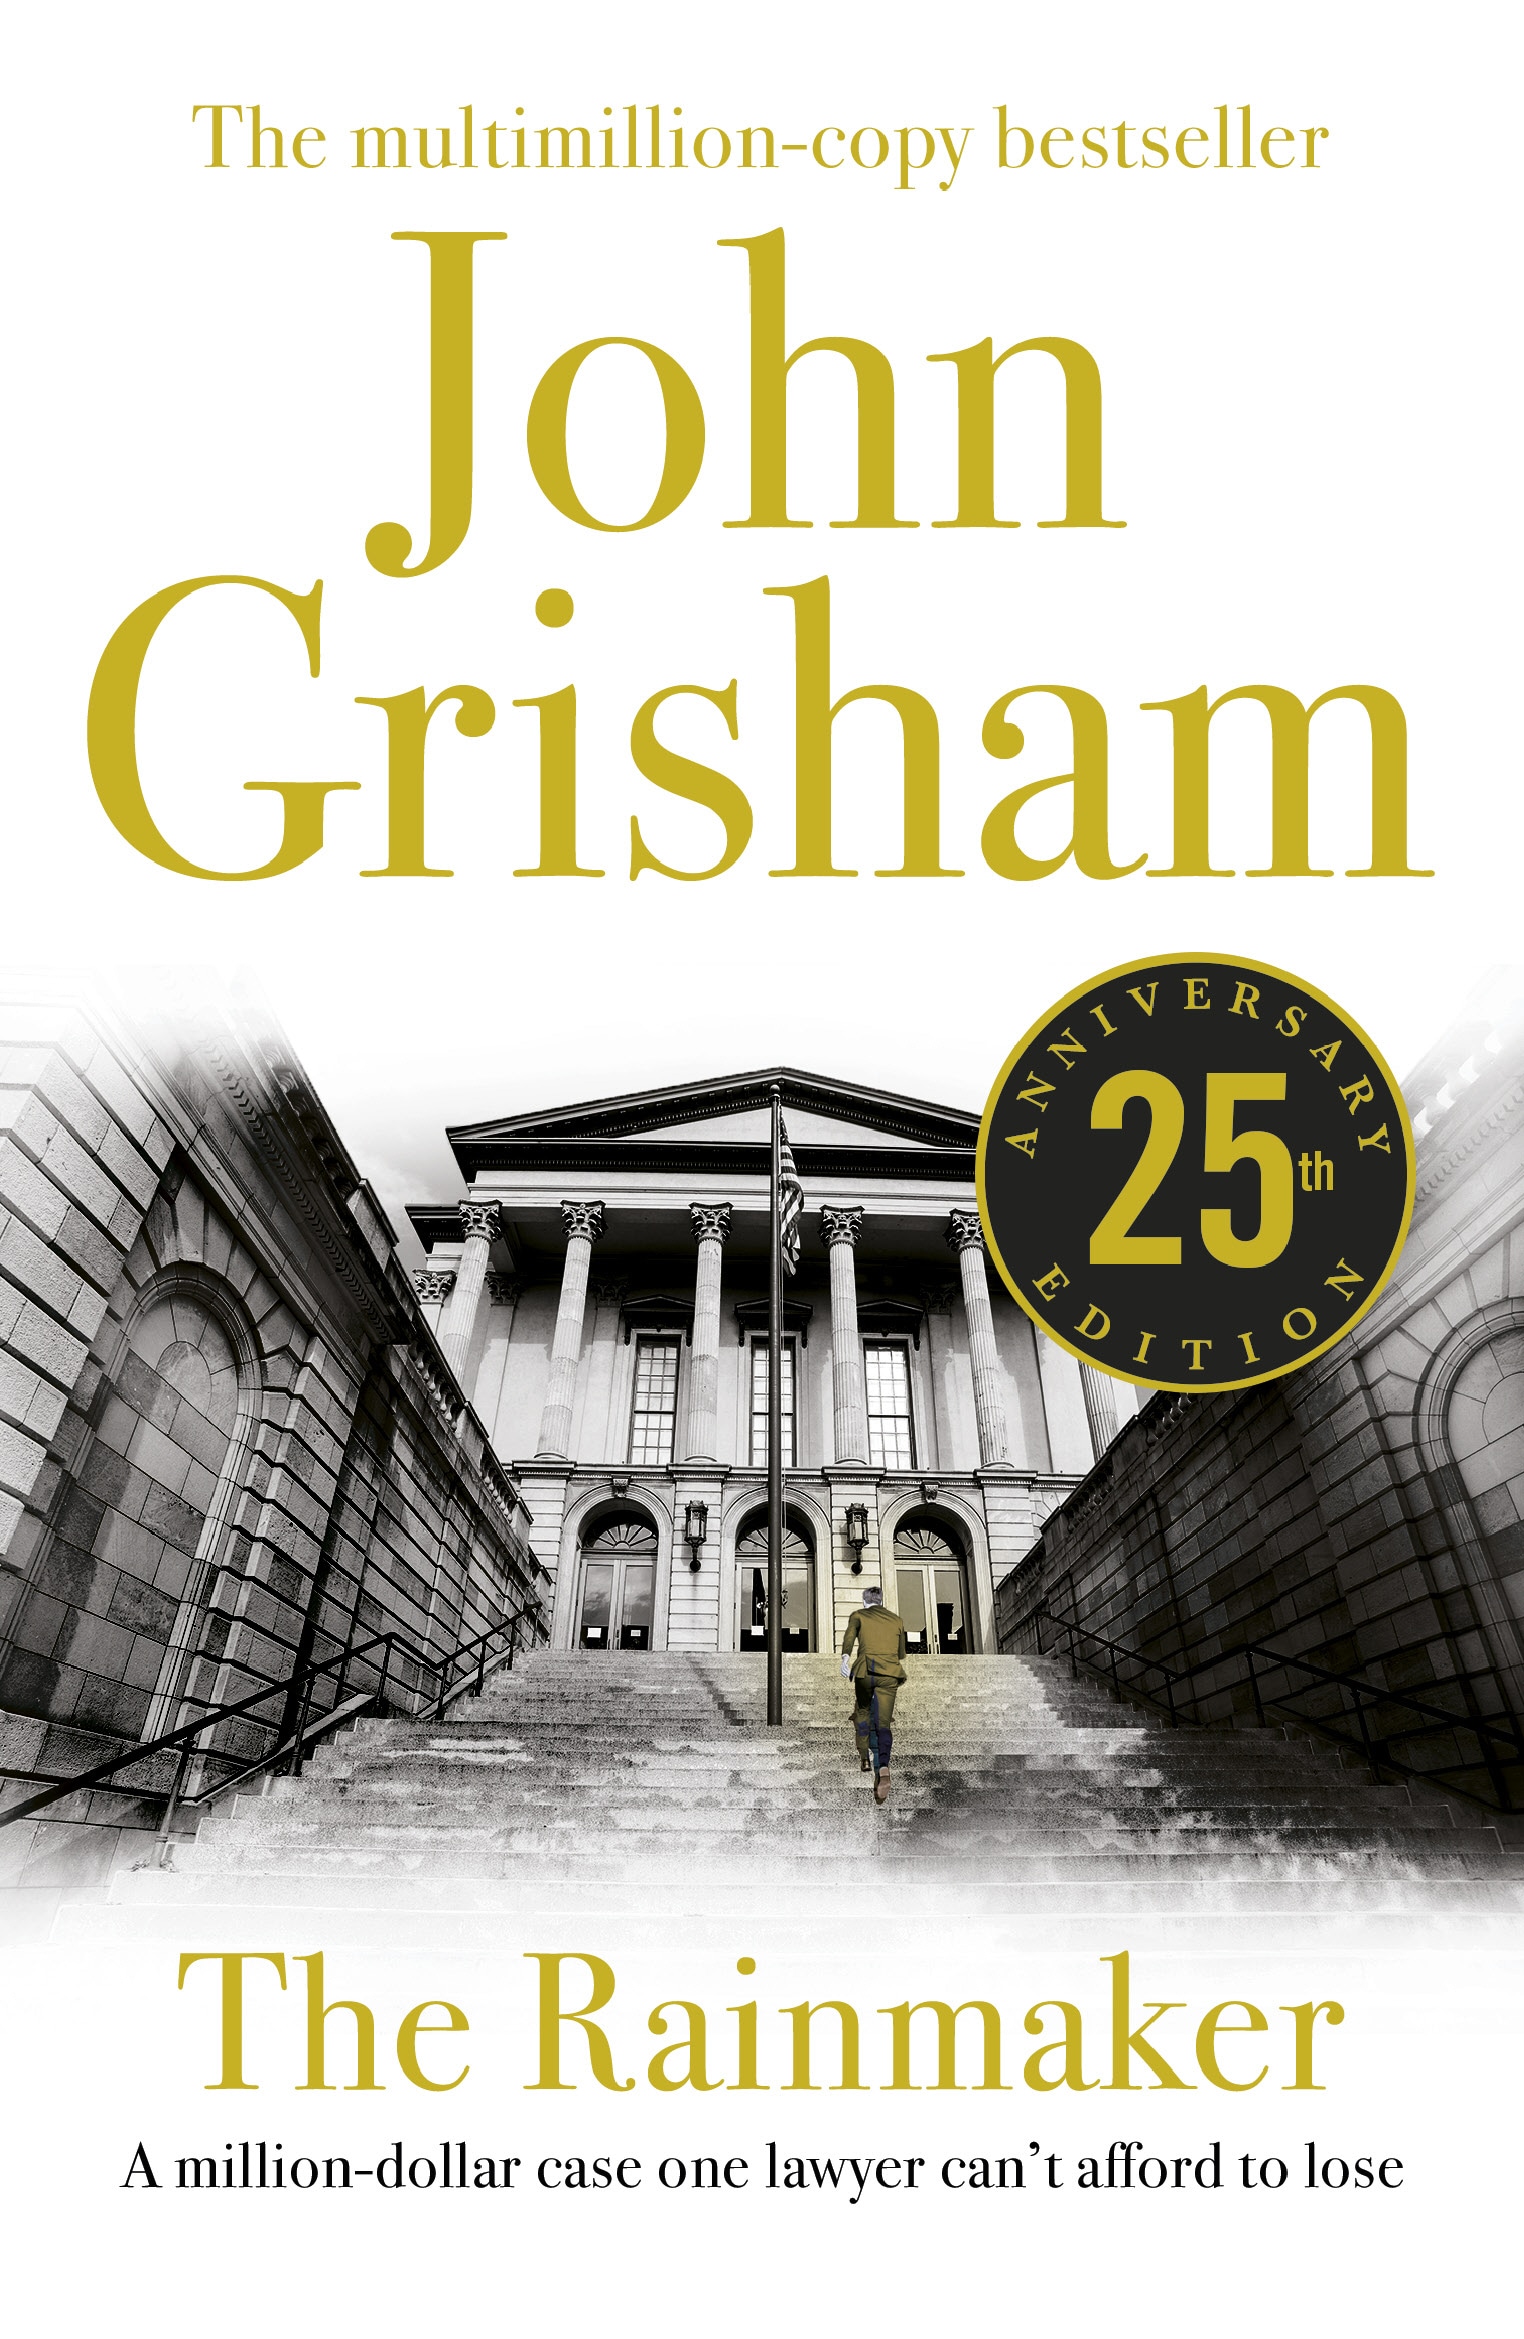 Book “The Rainmaker” by John Grisham